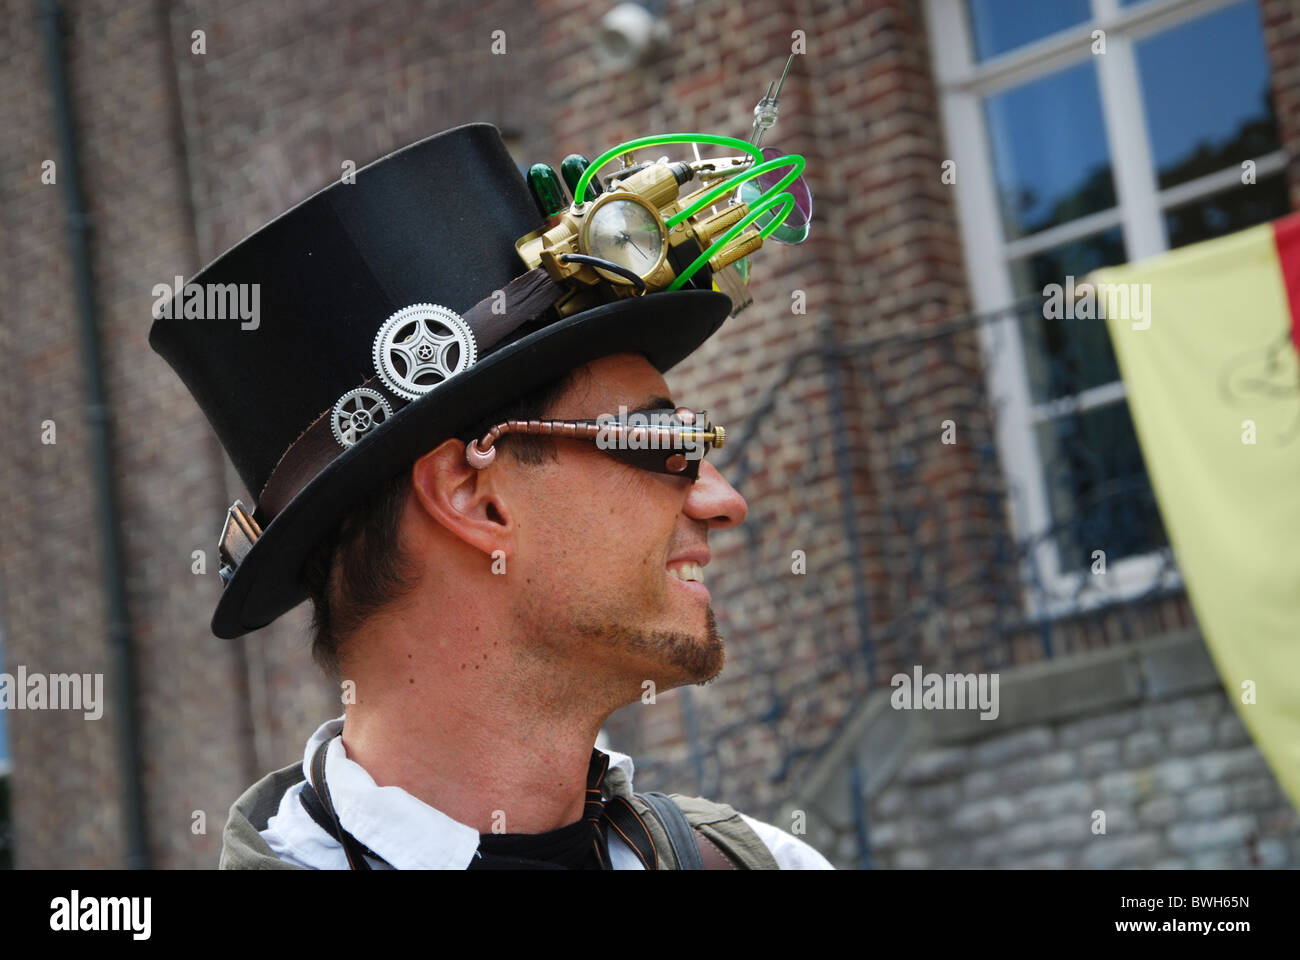 steampunk male at 2010 Fantasy Fair Arcen Netherlands Stock Photo